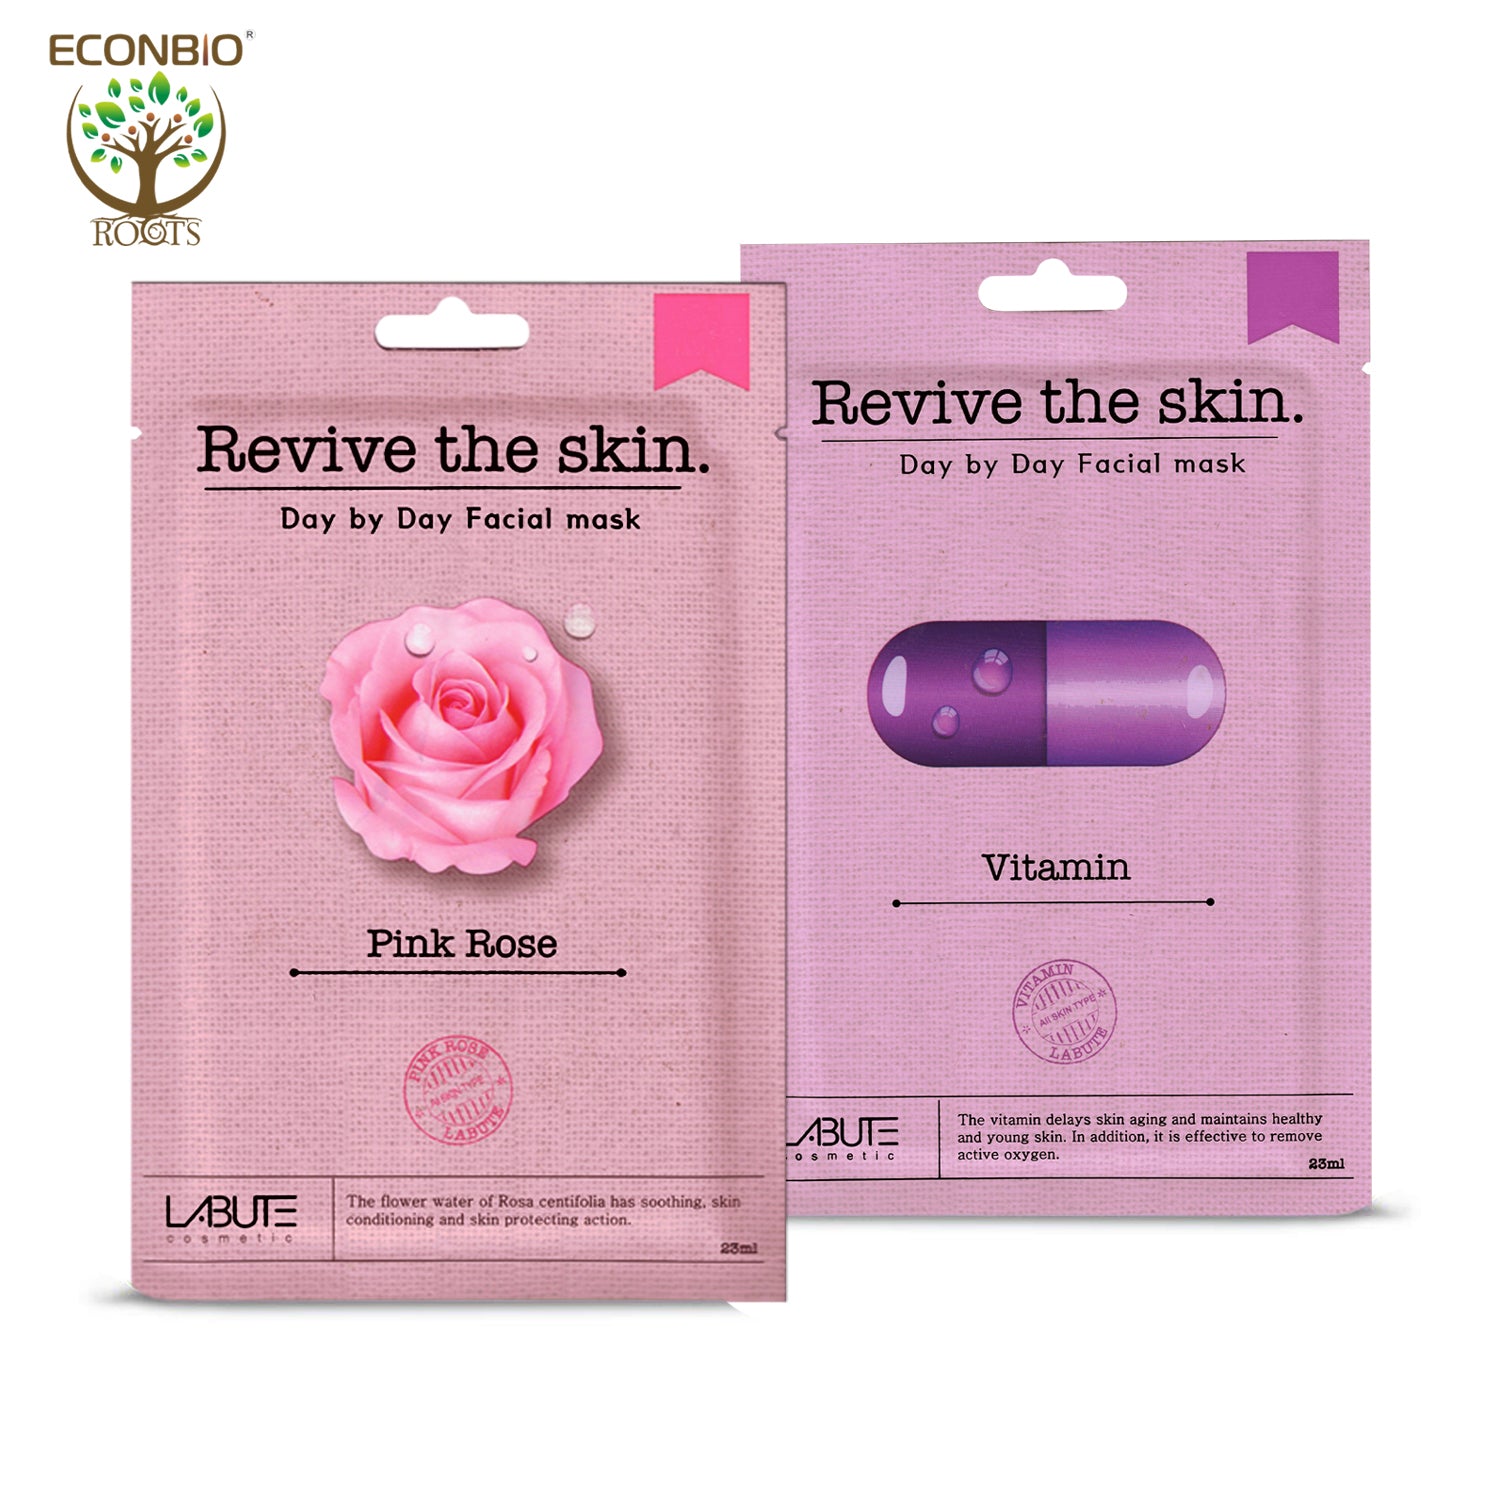 ECONBIO ROOTS Labute Pink Rose & Vitamin Facial Mask (Pack of 2)